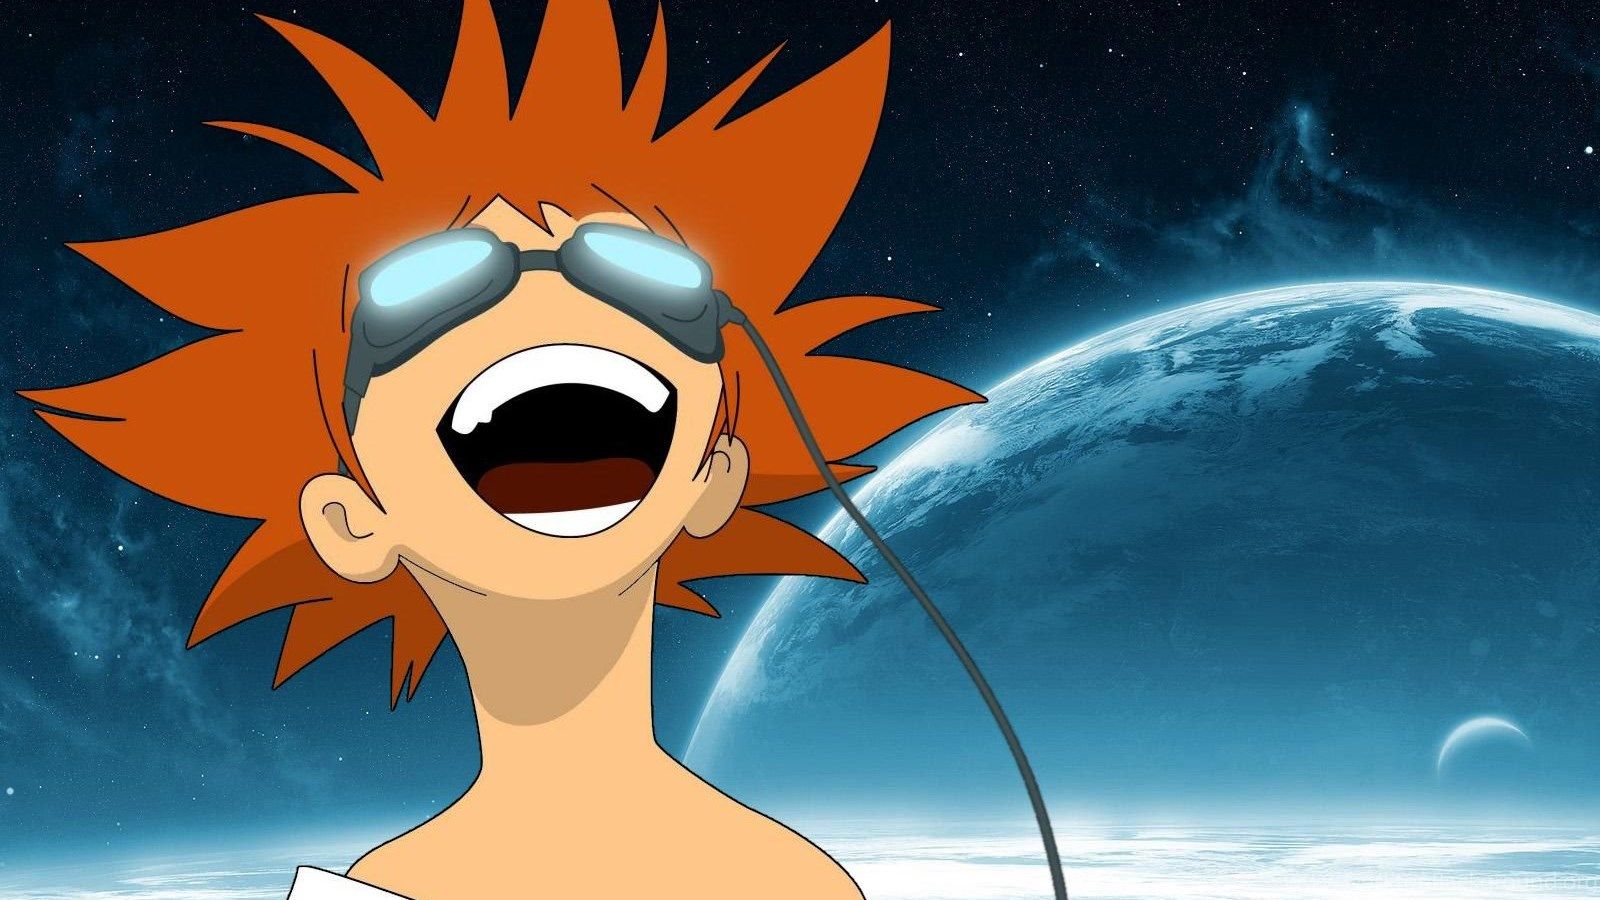 Edward Crazy Laugh: Anime Wallpaper Background Bandit Desktop Background